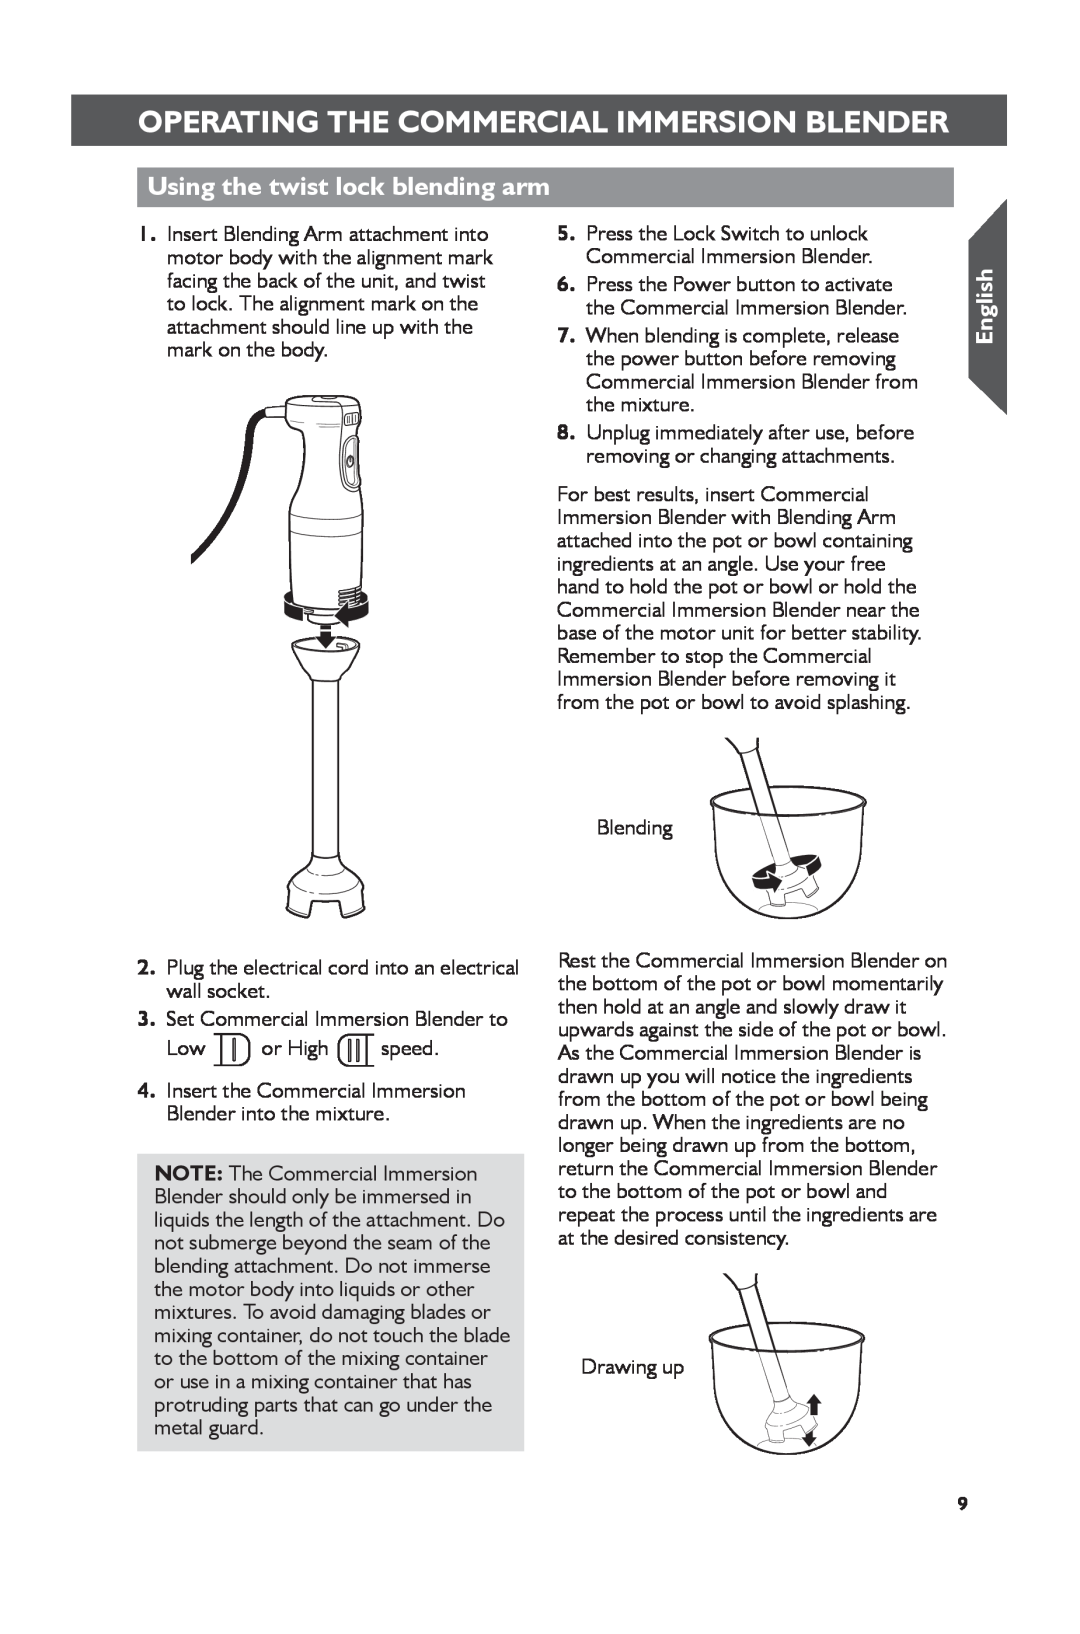 KitchenAid KHBC212 manual Using the twist lock blending arm, Operating The Commercial Immersion Blender, English, Blending 